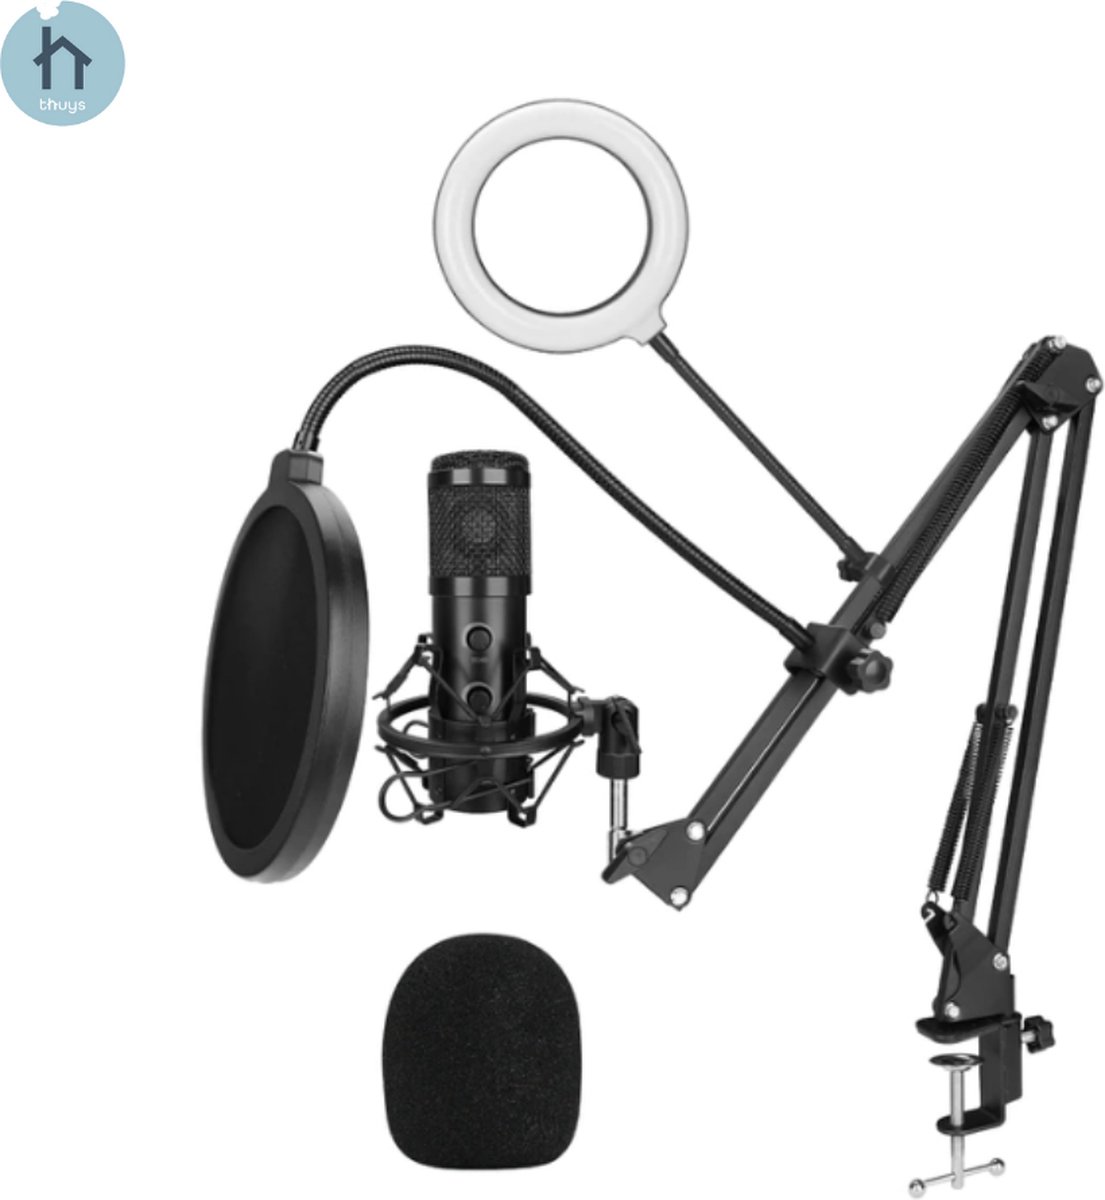 Microfoon - Microfoon Met Arm Plug And Play - Microfoon Voor PC Duurzaam - USB - Ringlamp- Zwart